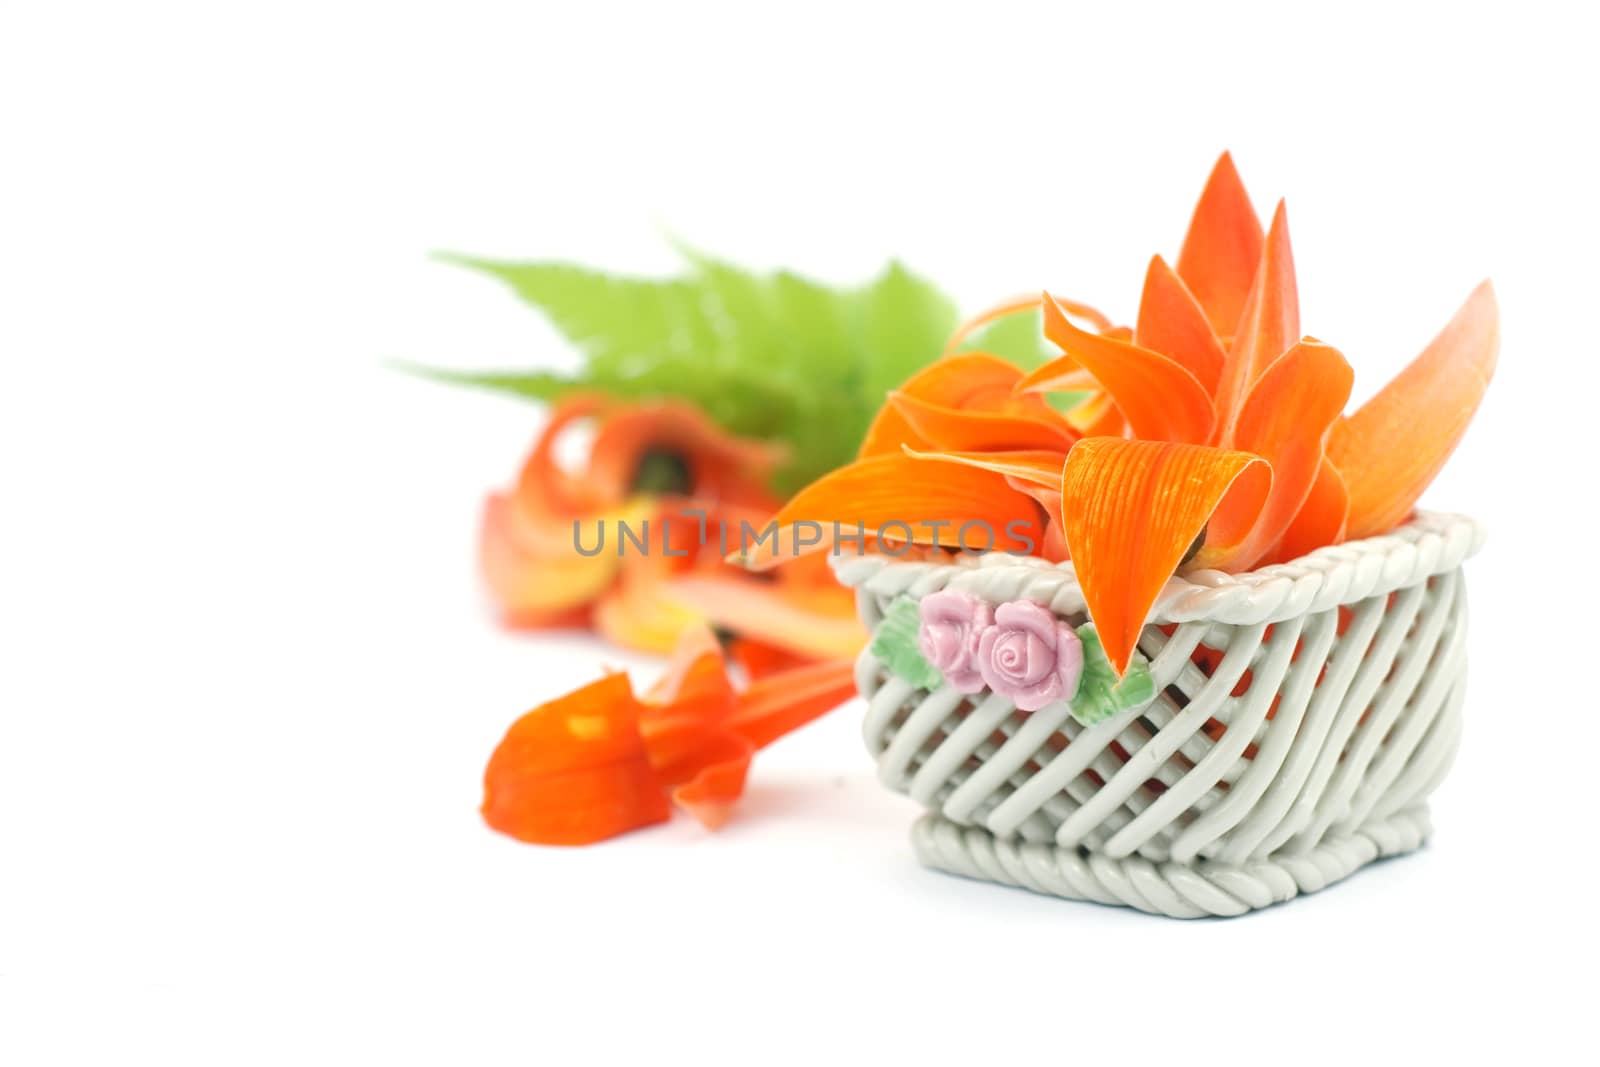 Petals of Bastard Teak Flower in ceramic basket on white background.